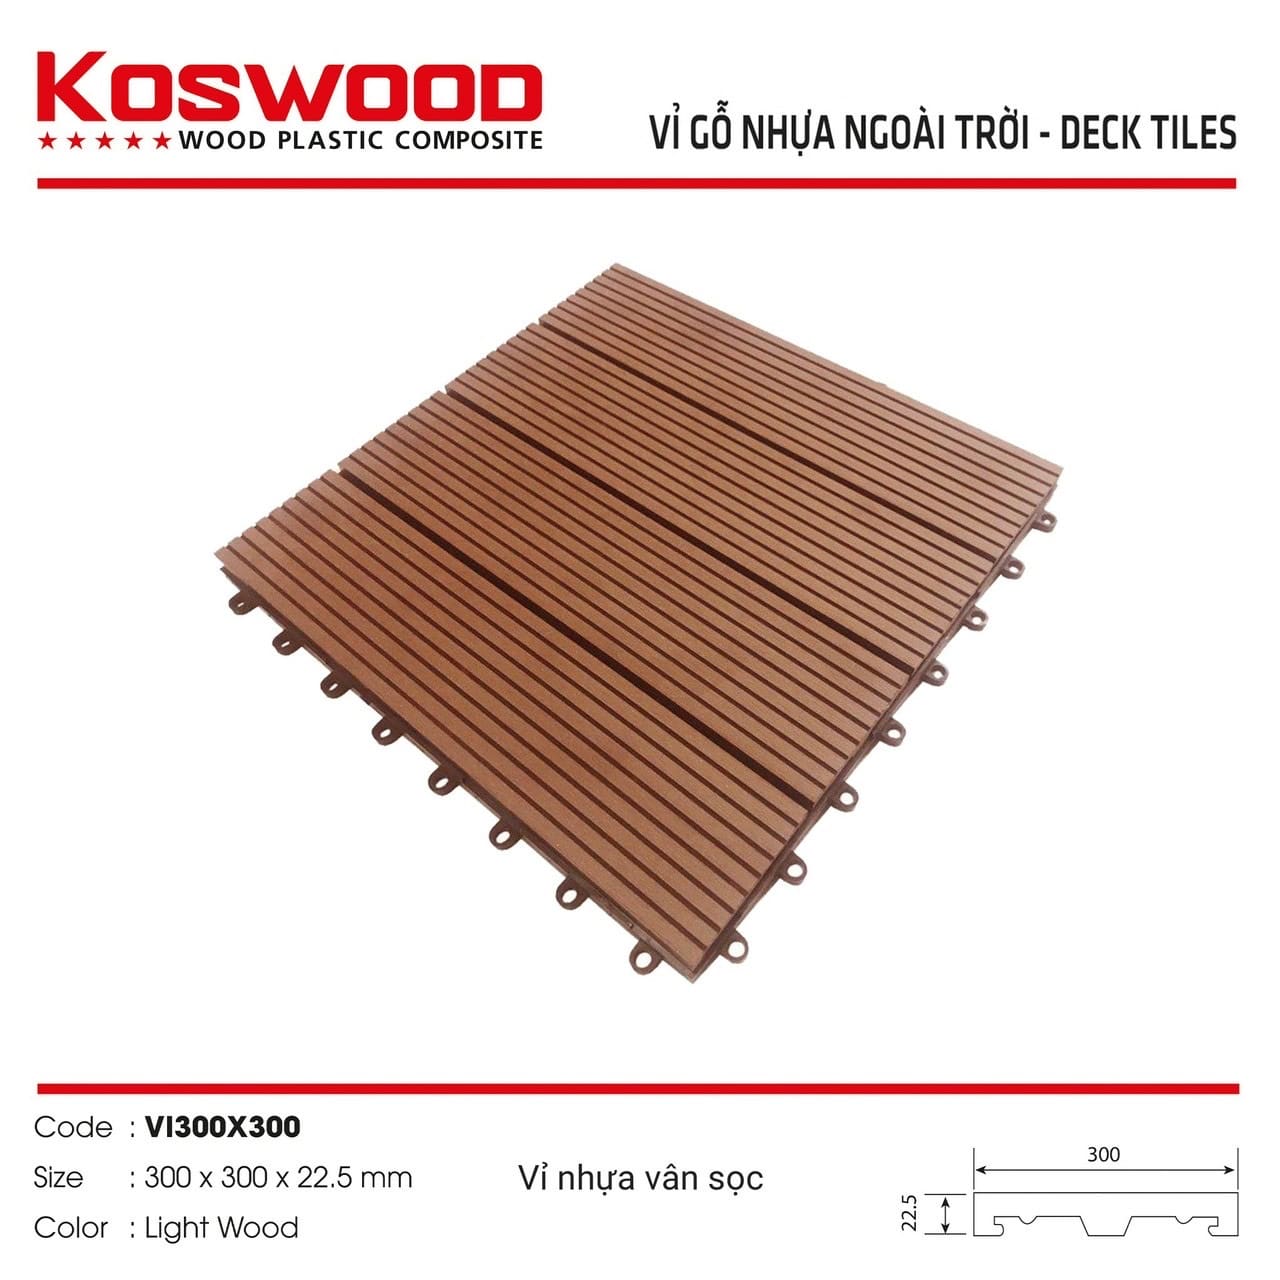 Vi go composite Koswood VS light wood